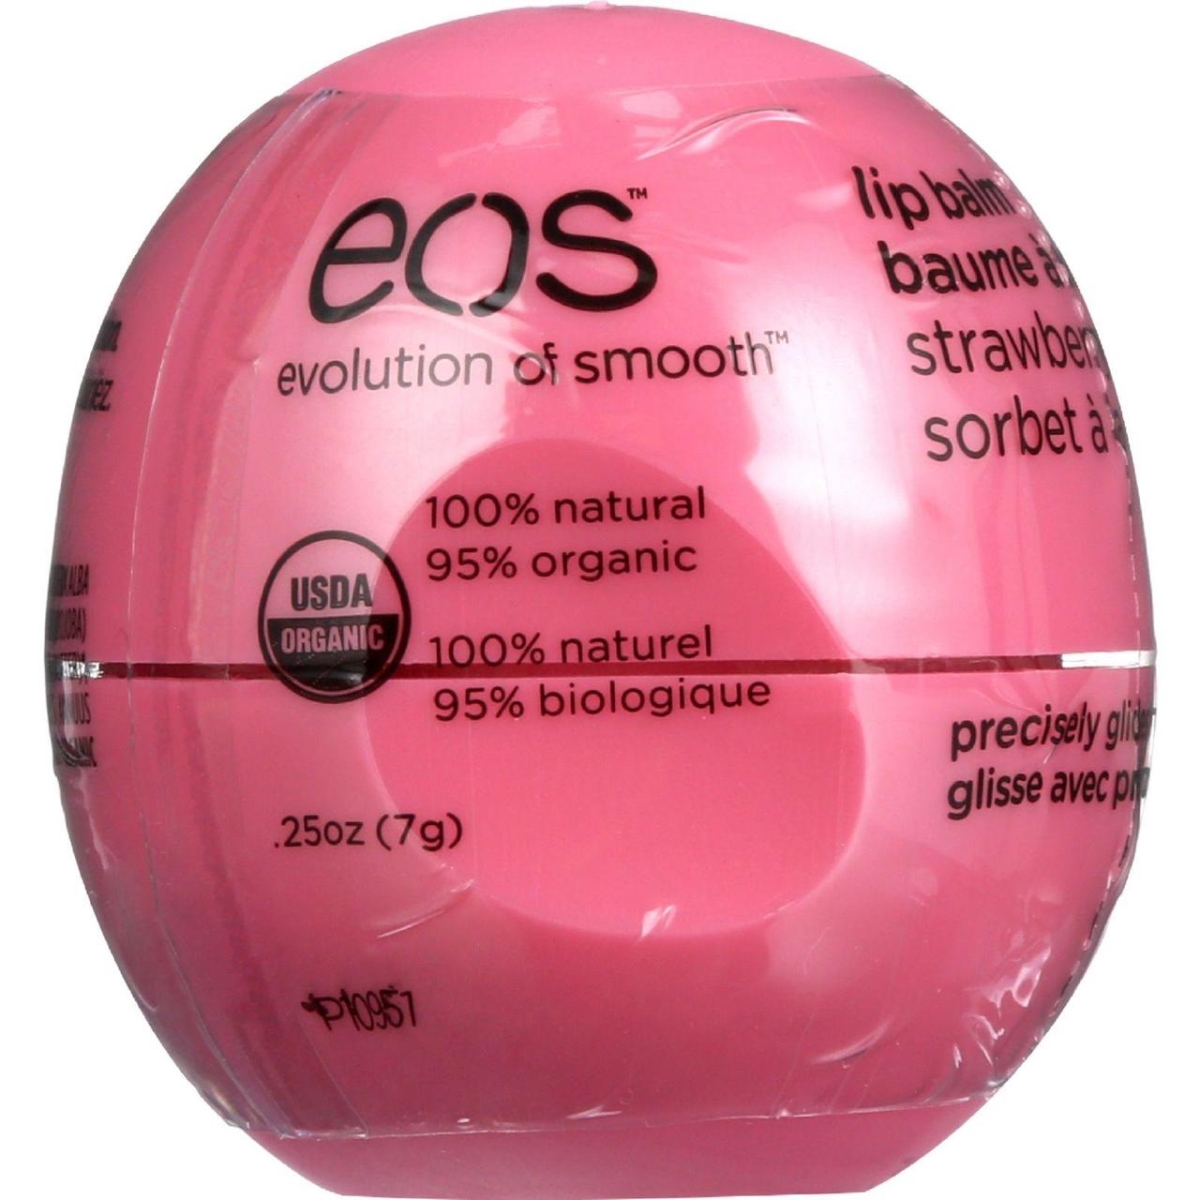 Hg1117001 0.25 Oz Organic Smooth Sphere Lip Balm - Strawberry Sorbet, Case Of 8